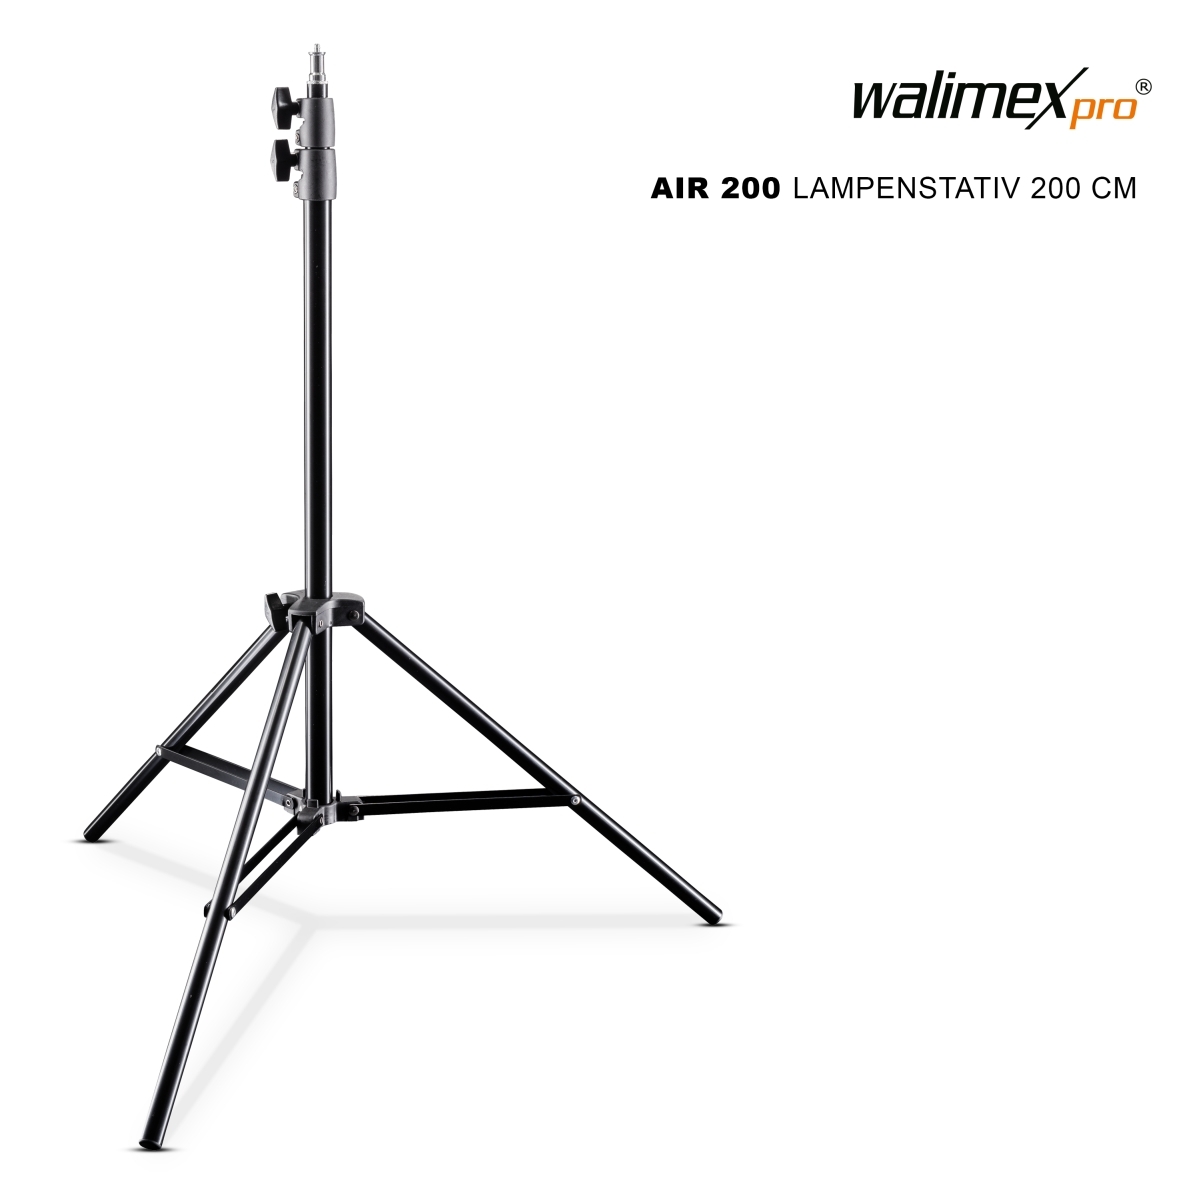 Walimex pro AIR 200 Lampenstativ 200 cm